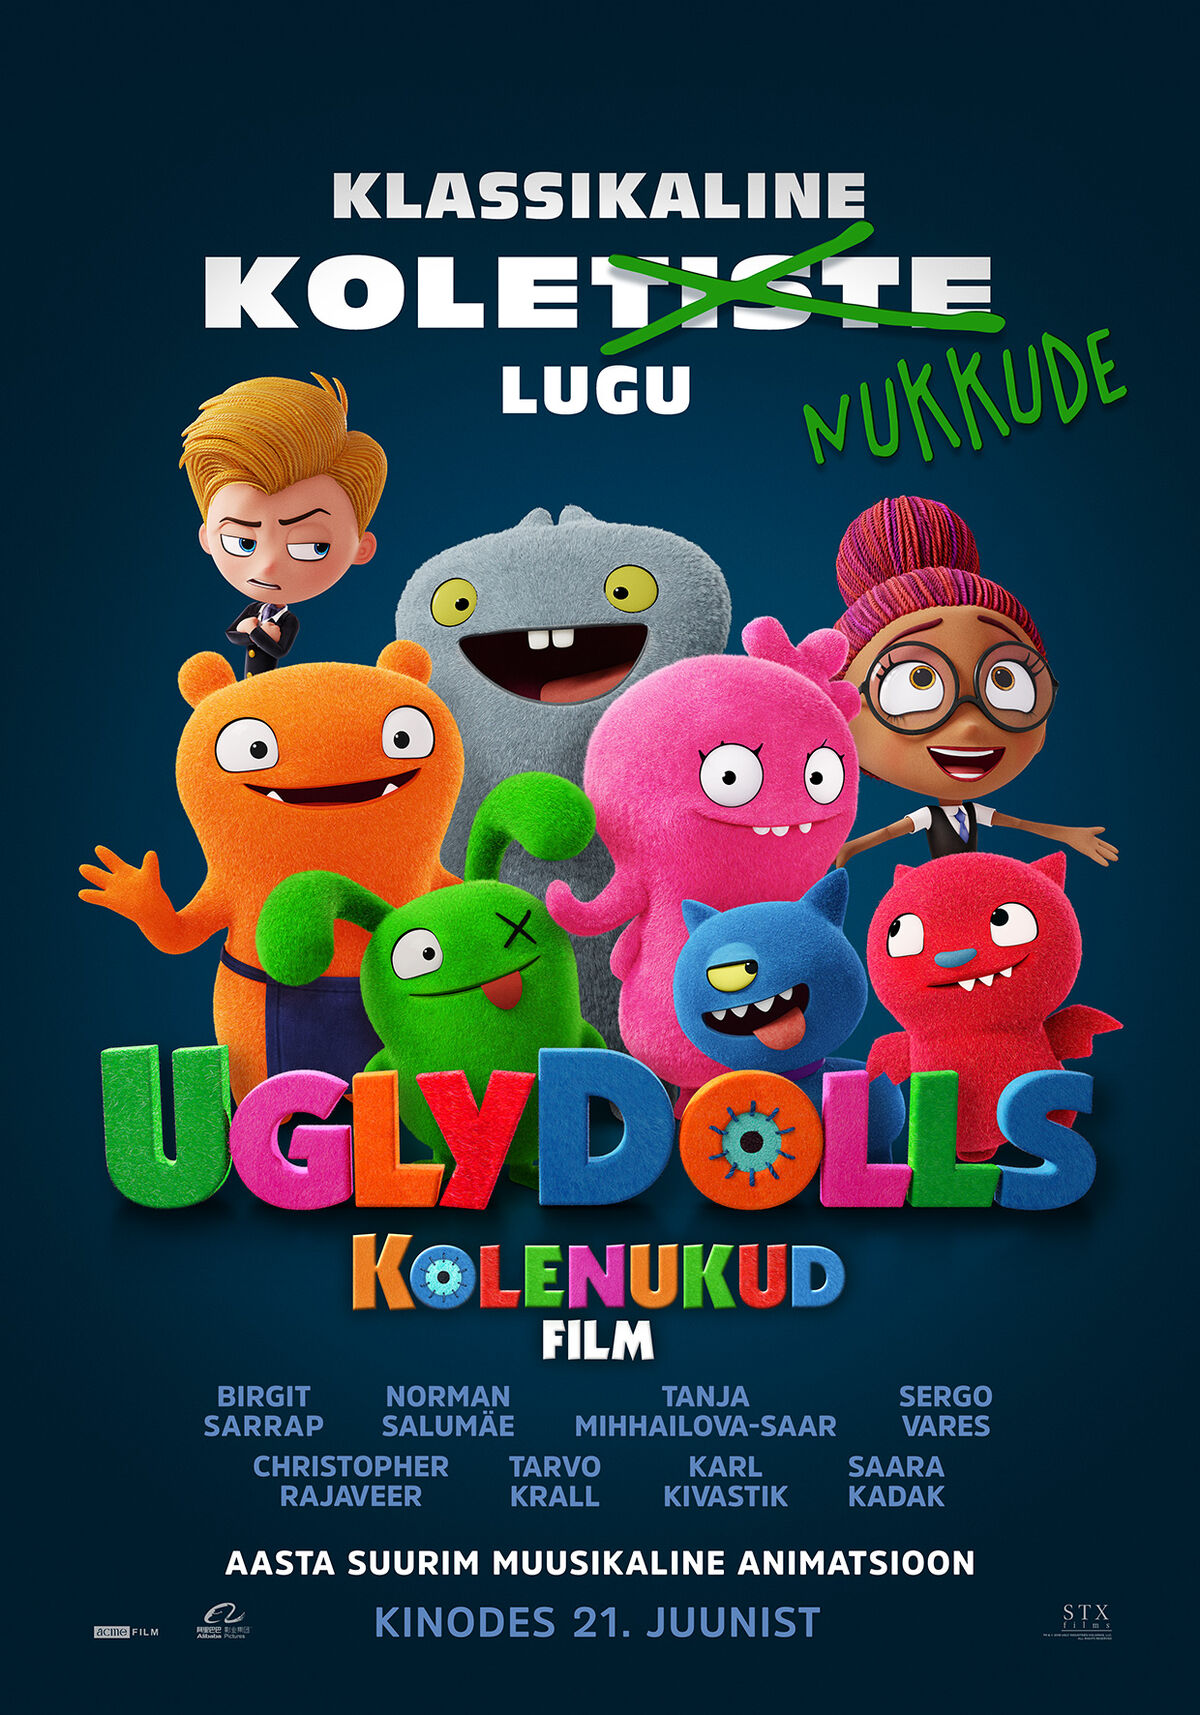 UglyDolls: Kolenukud. Film | The Dubbing Database | Fandom